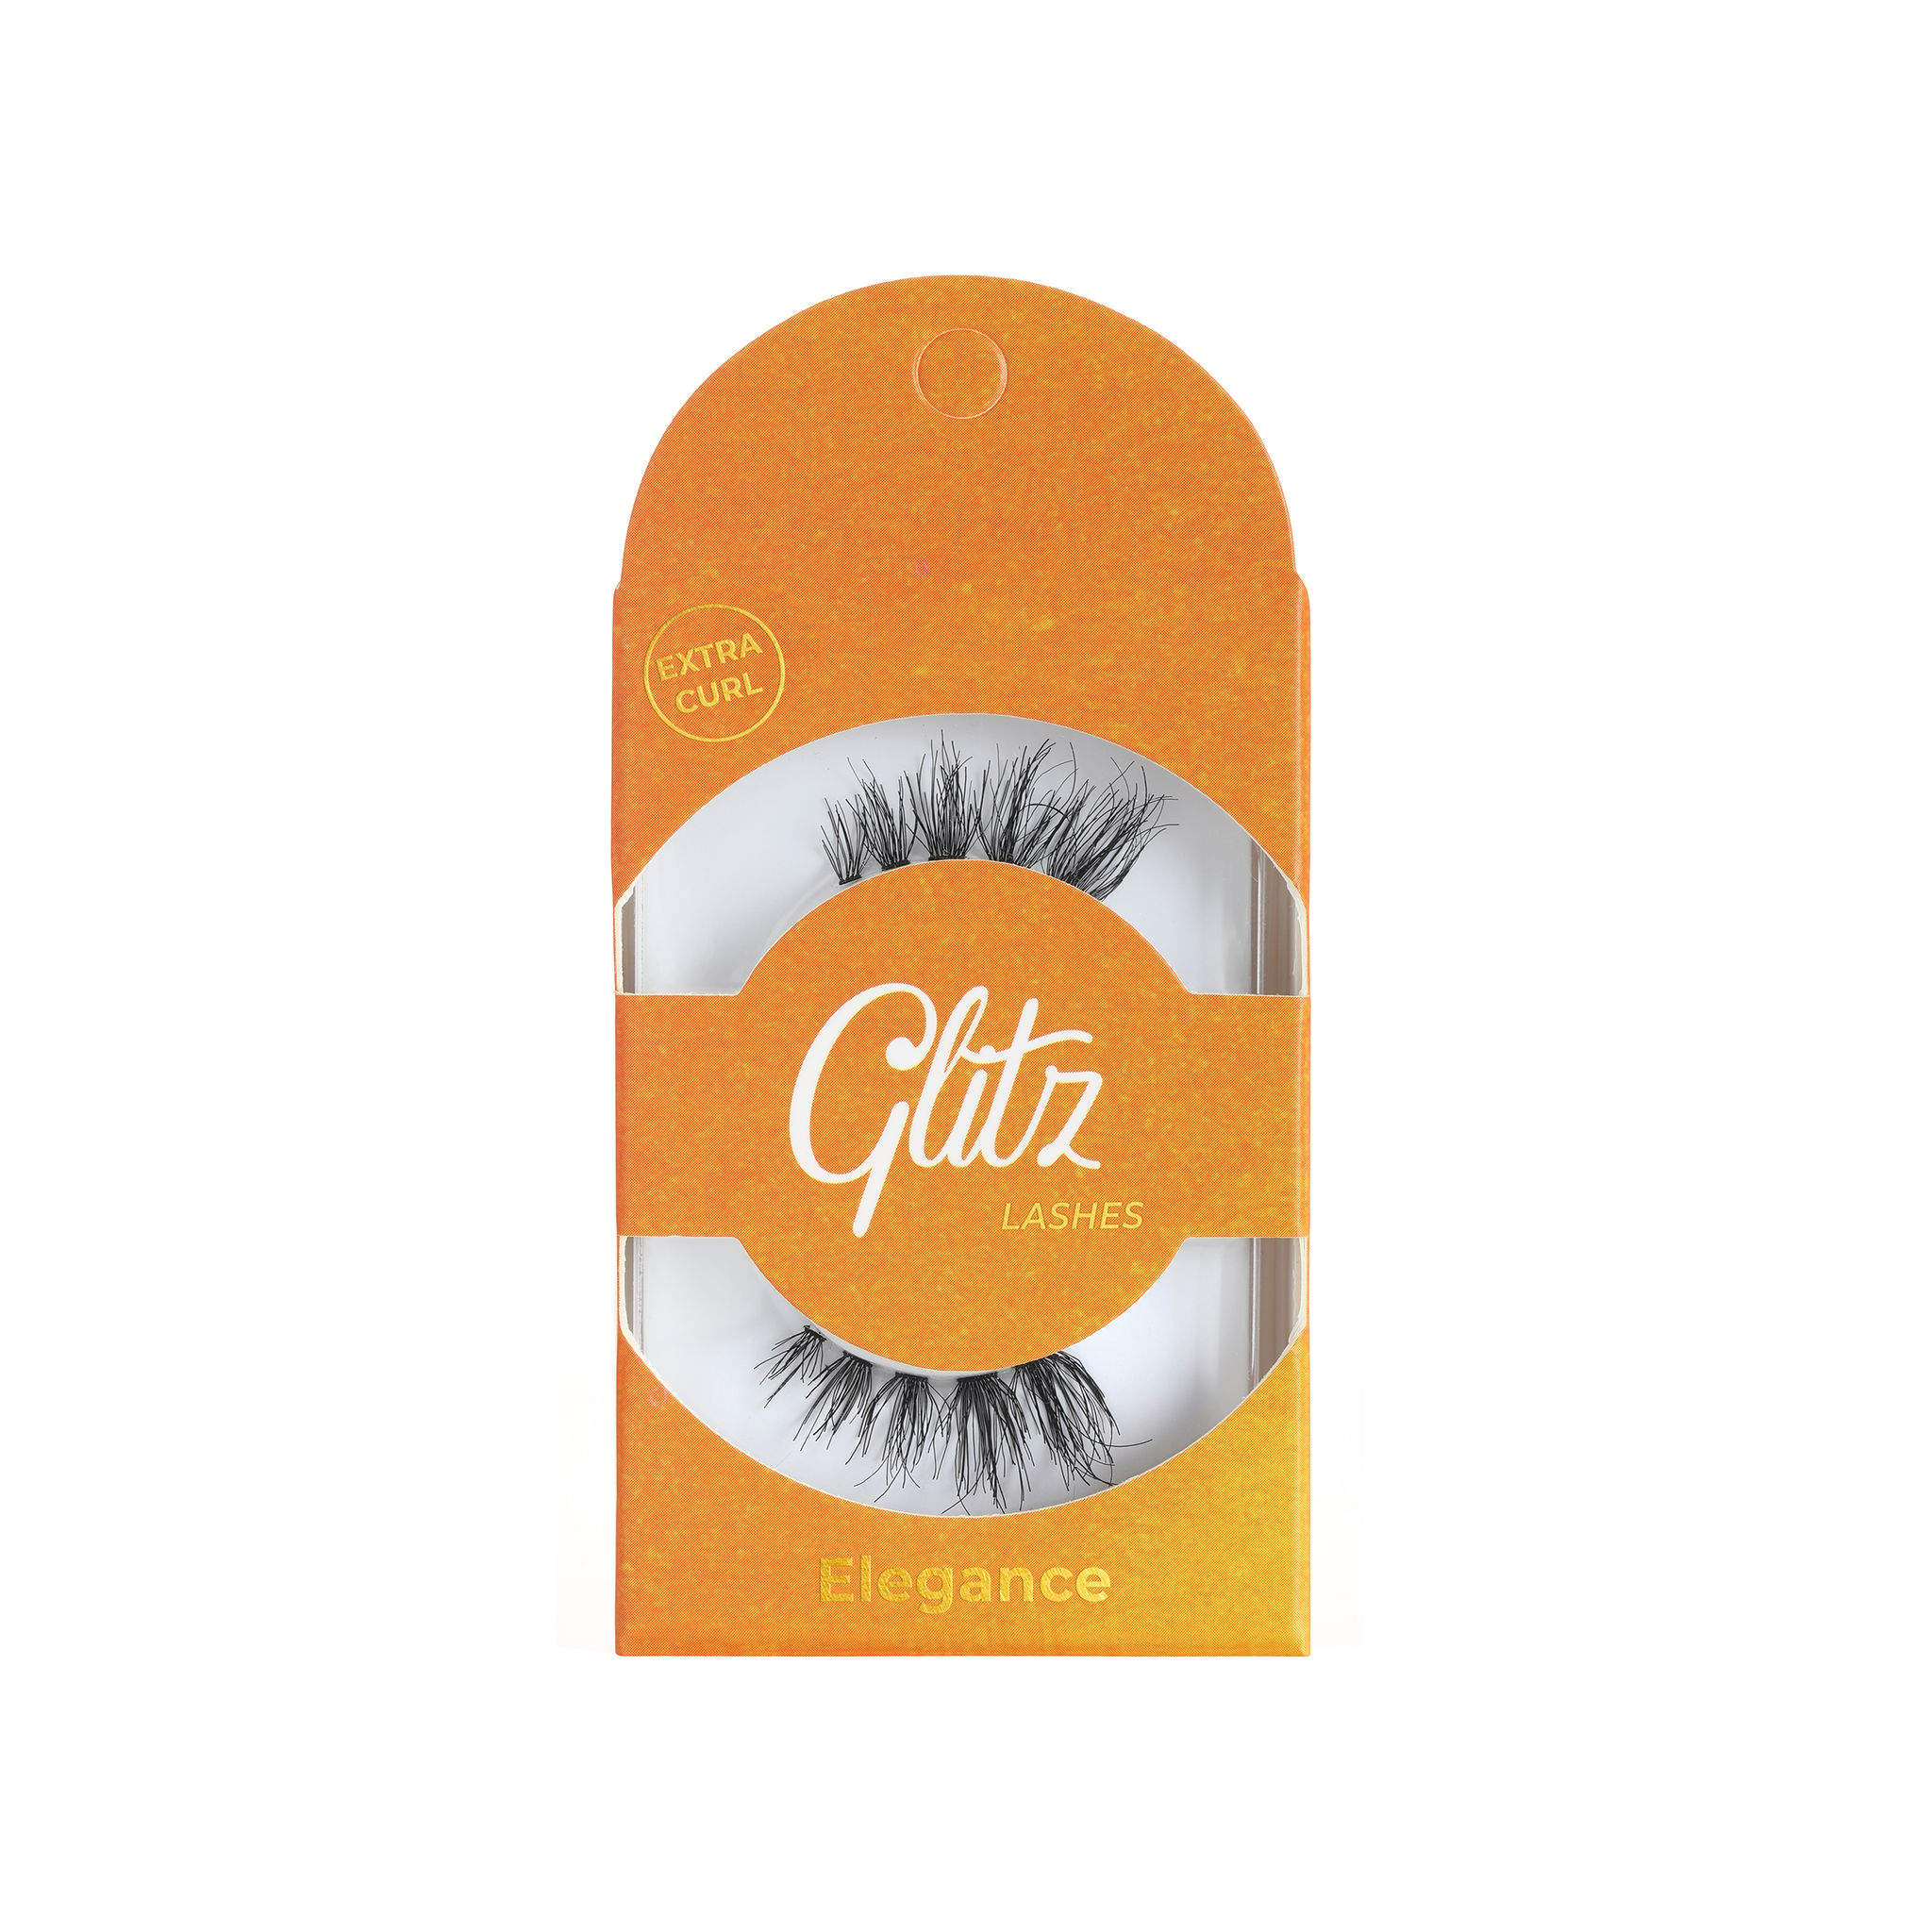 Glitz Natural Eyelashes - Elegance